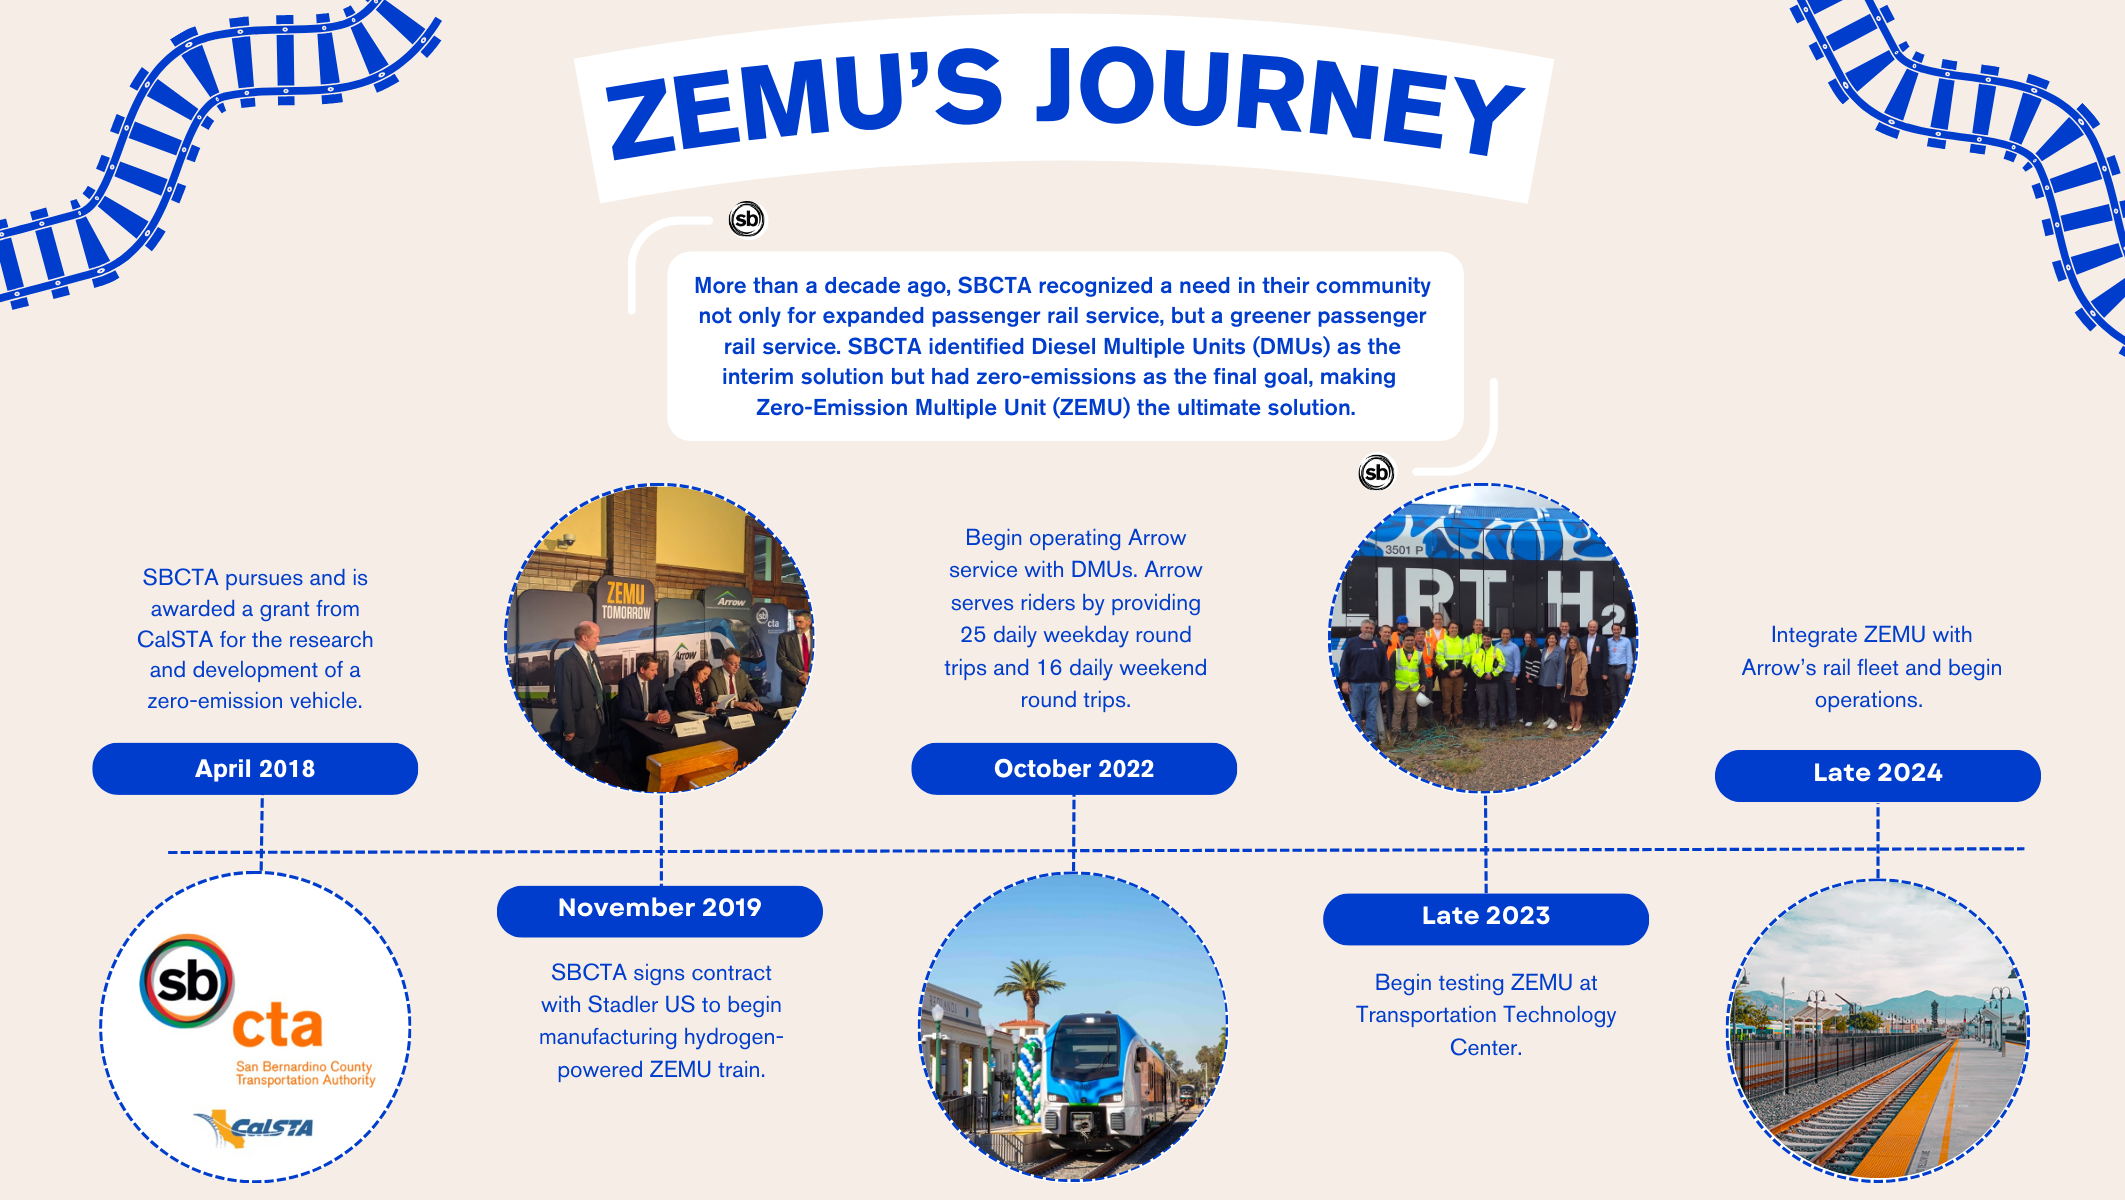 ZEMU Timeline Journey (Slide 2 of 2)